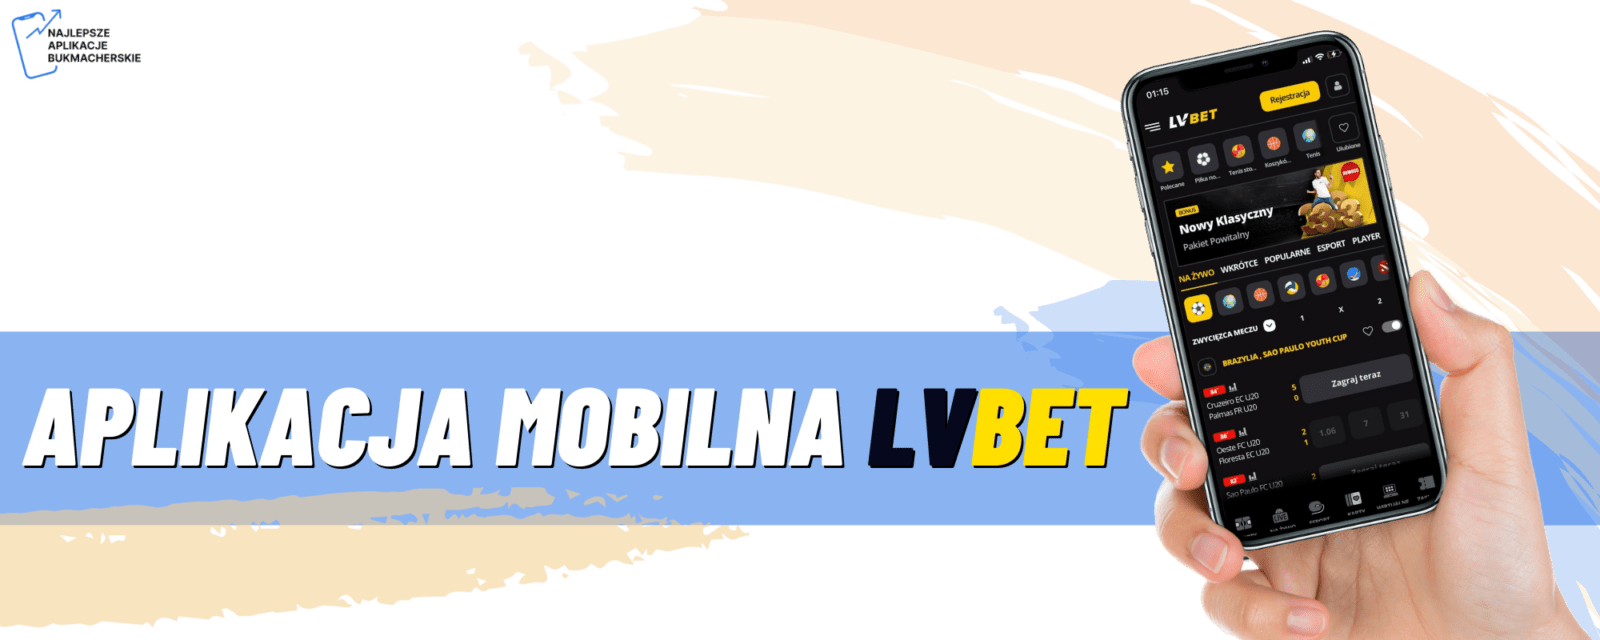 Aplikacja mobilna legalnego bukmachera LVbet